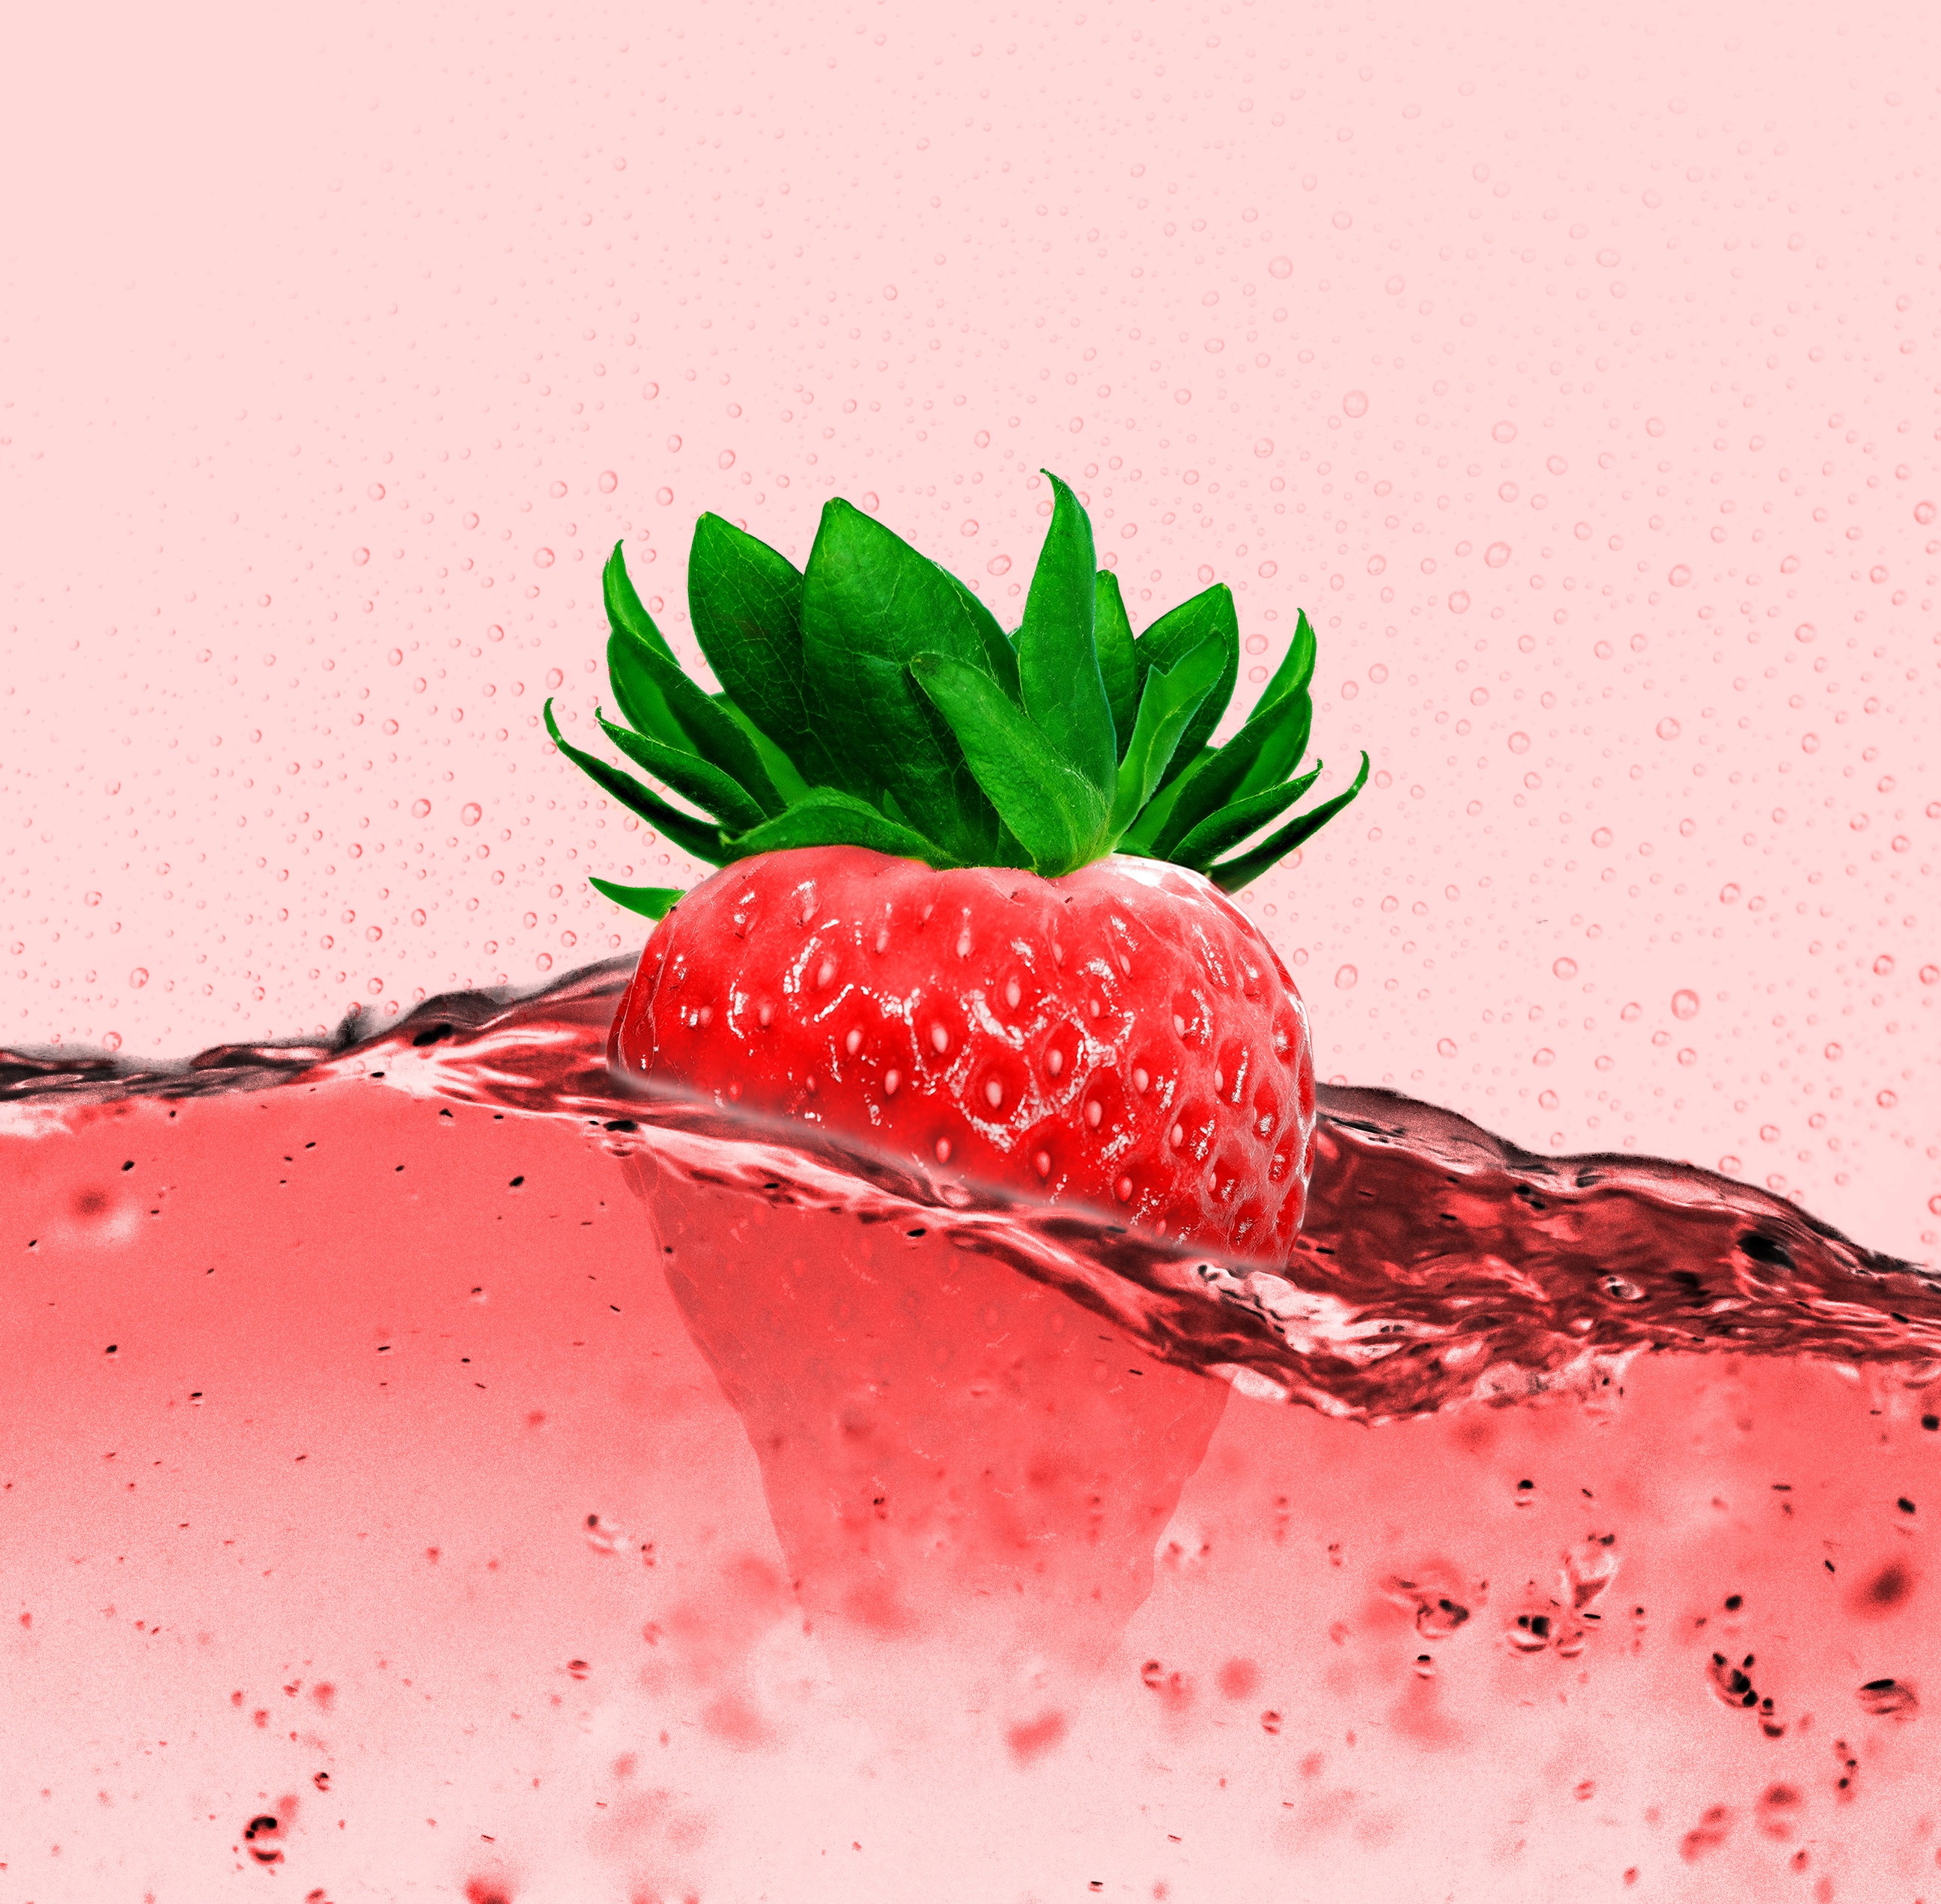 Strawberry drink photo